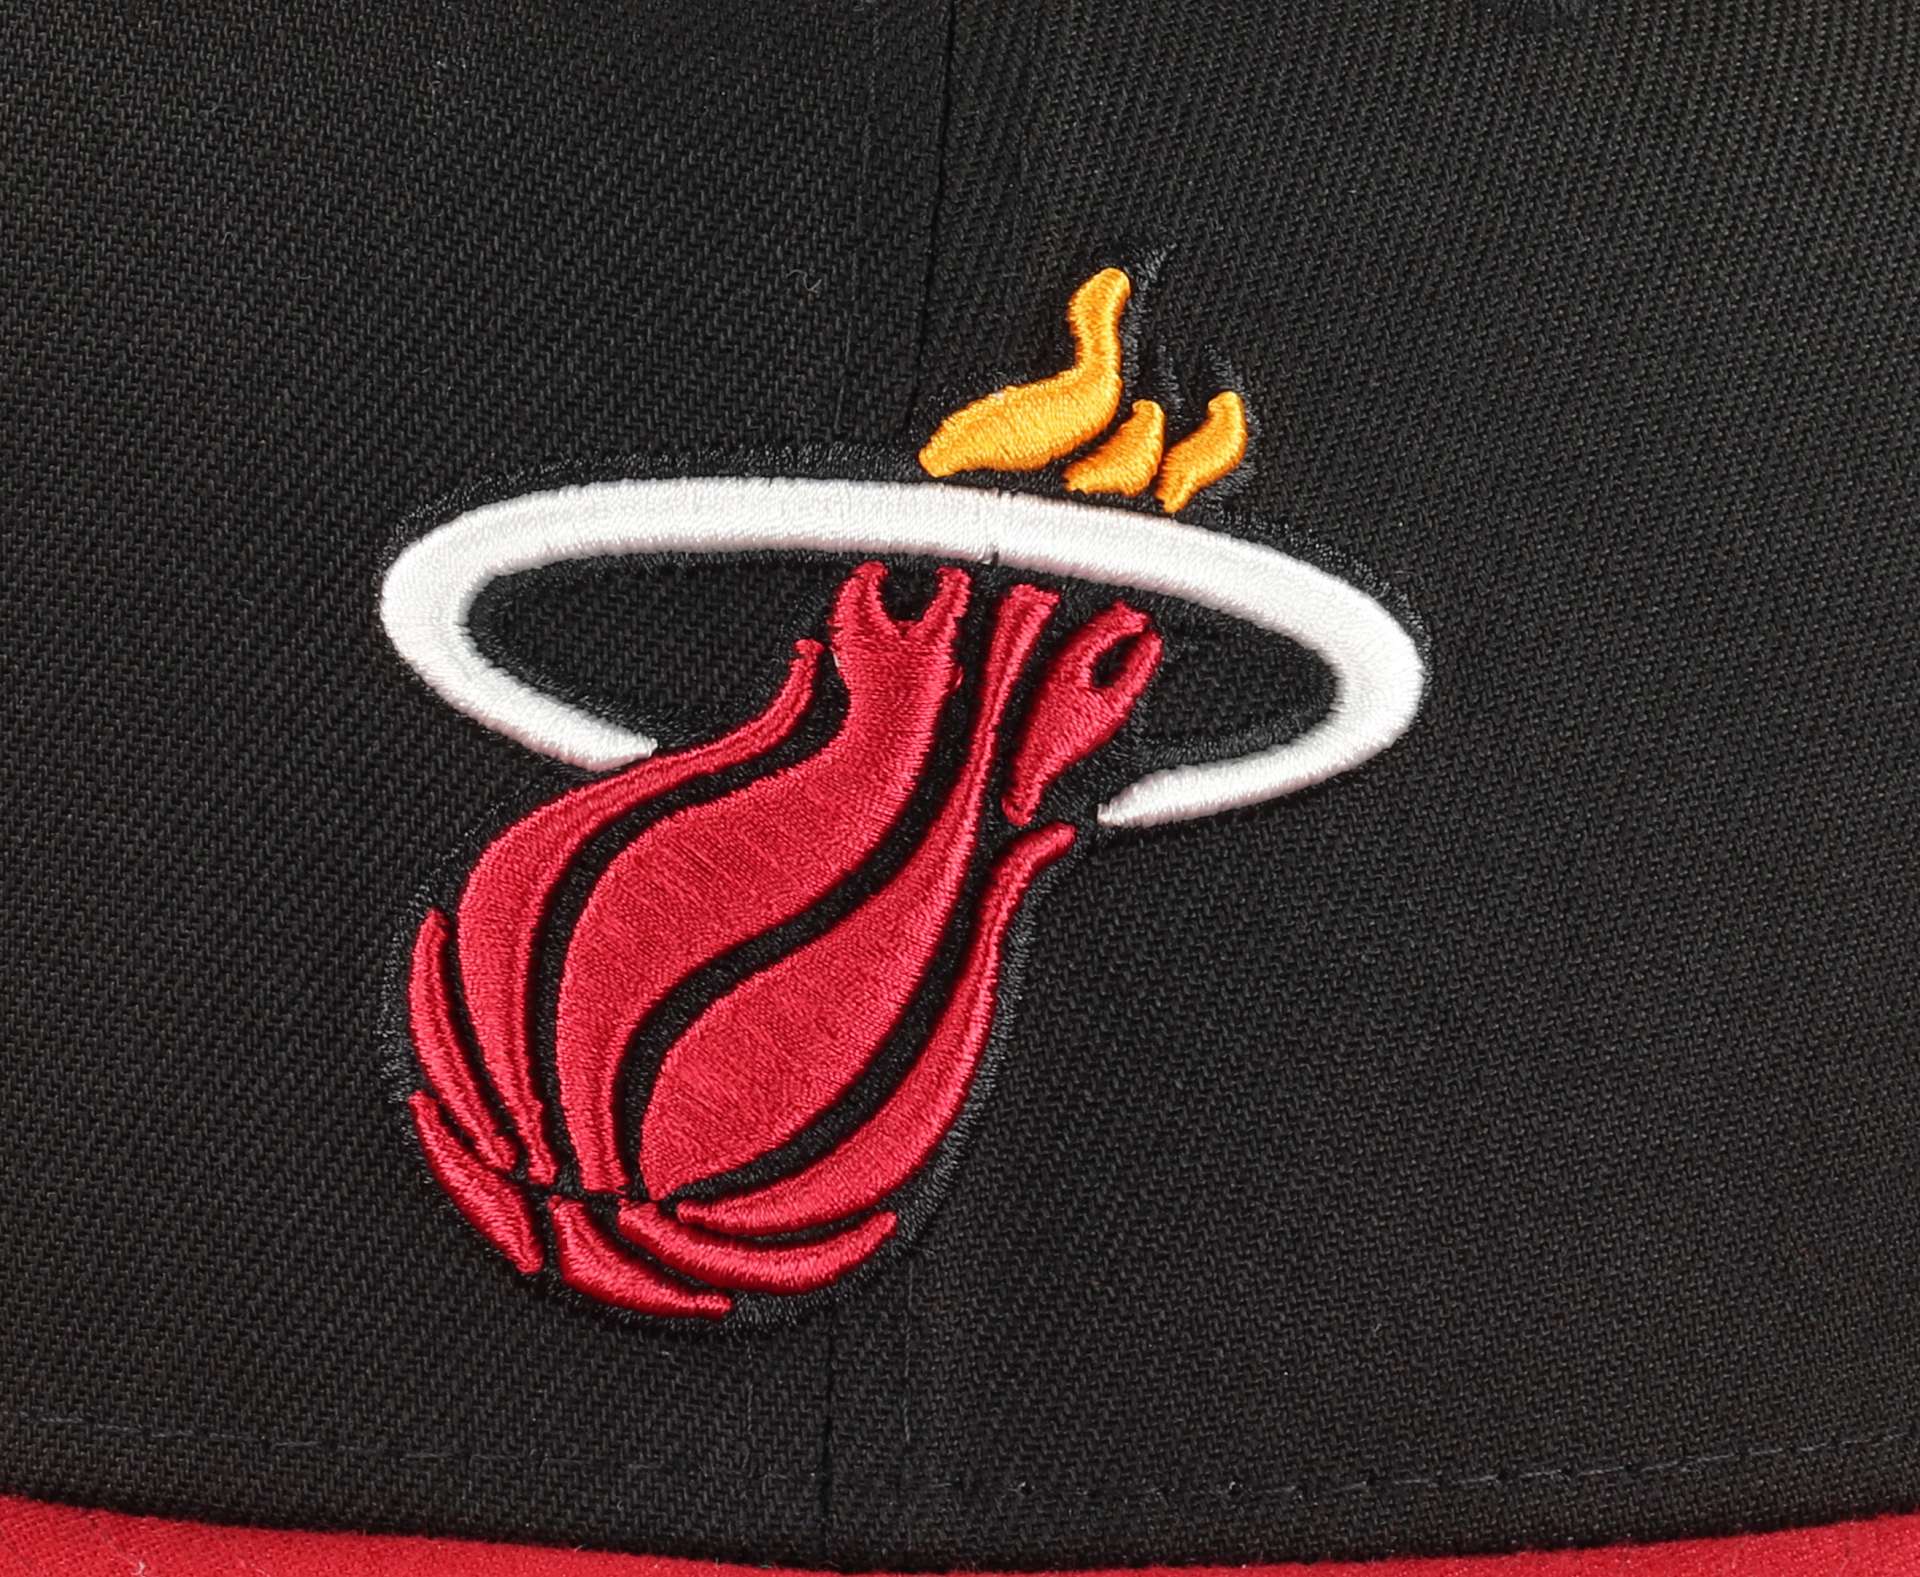 Miami Heat Sidefont Black / Red 9Fifty Snapback Cap New Era